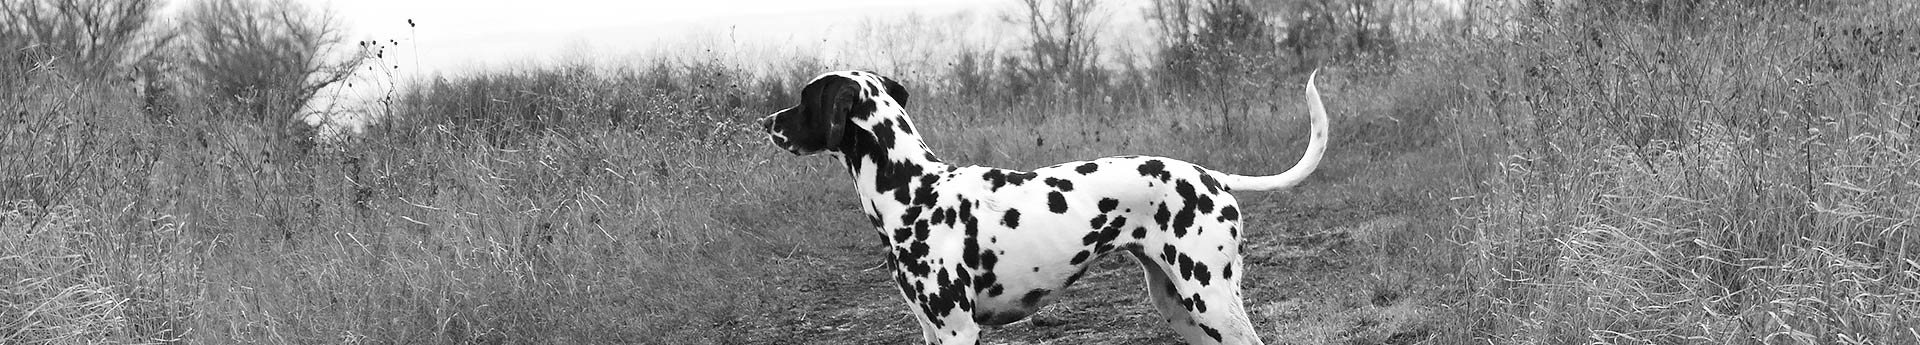 ORIJEN Original Dog Food - Spotted dog on a grassy trail - Luna from Mankato, Minnesota